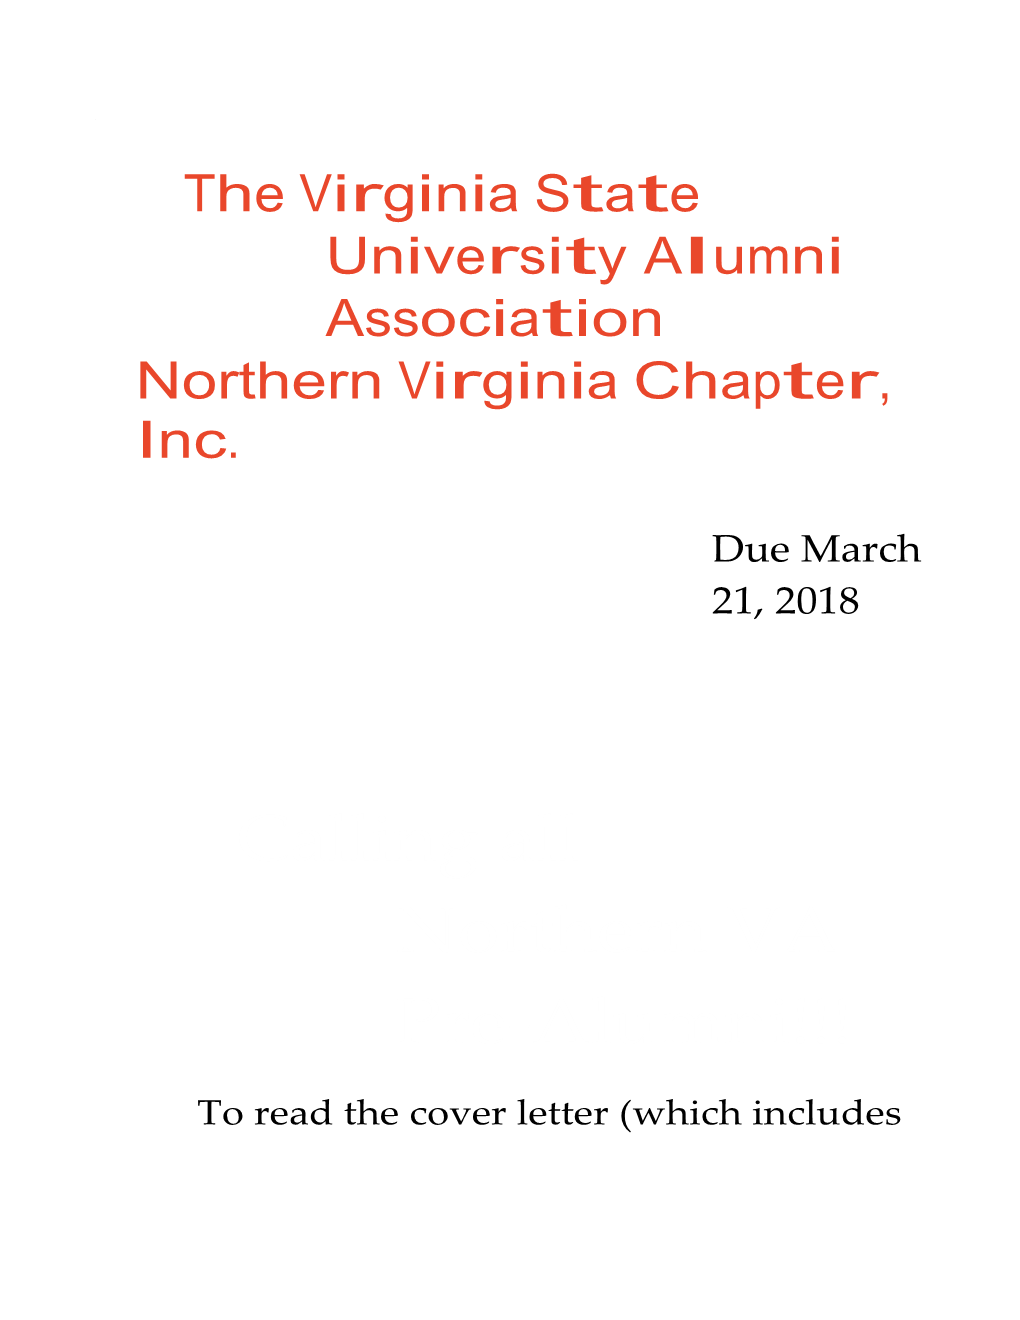 The Virginia State University Alumni Association